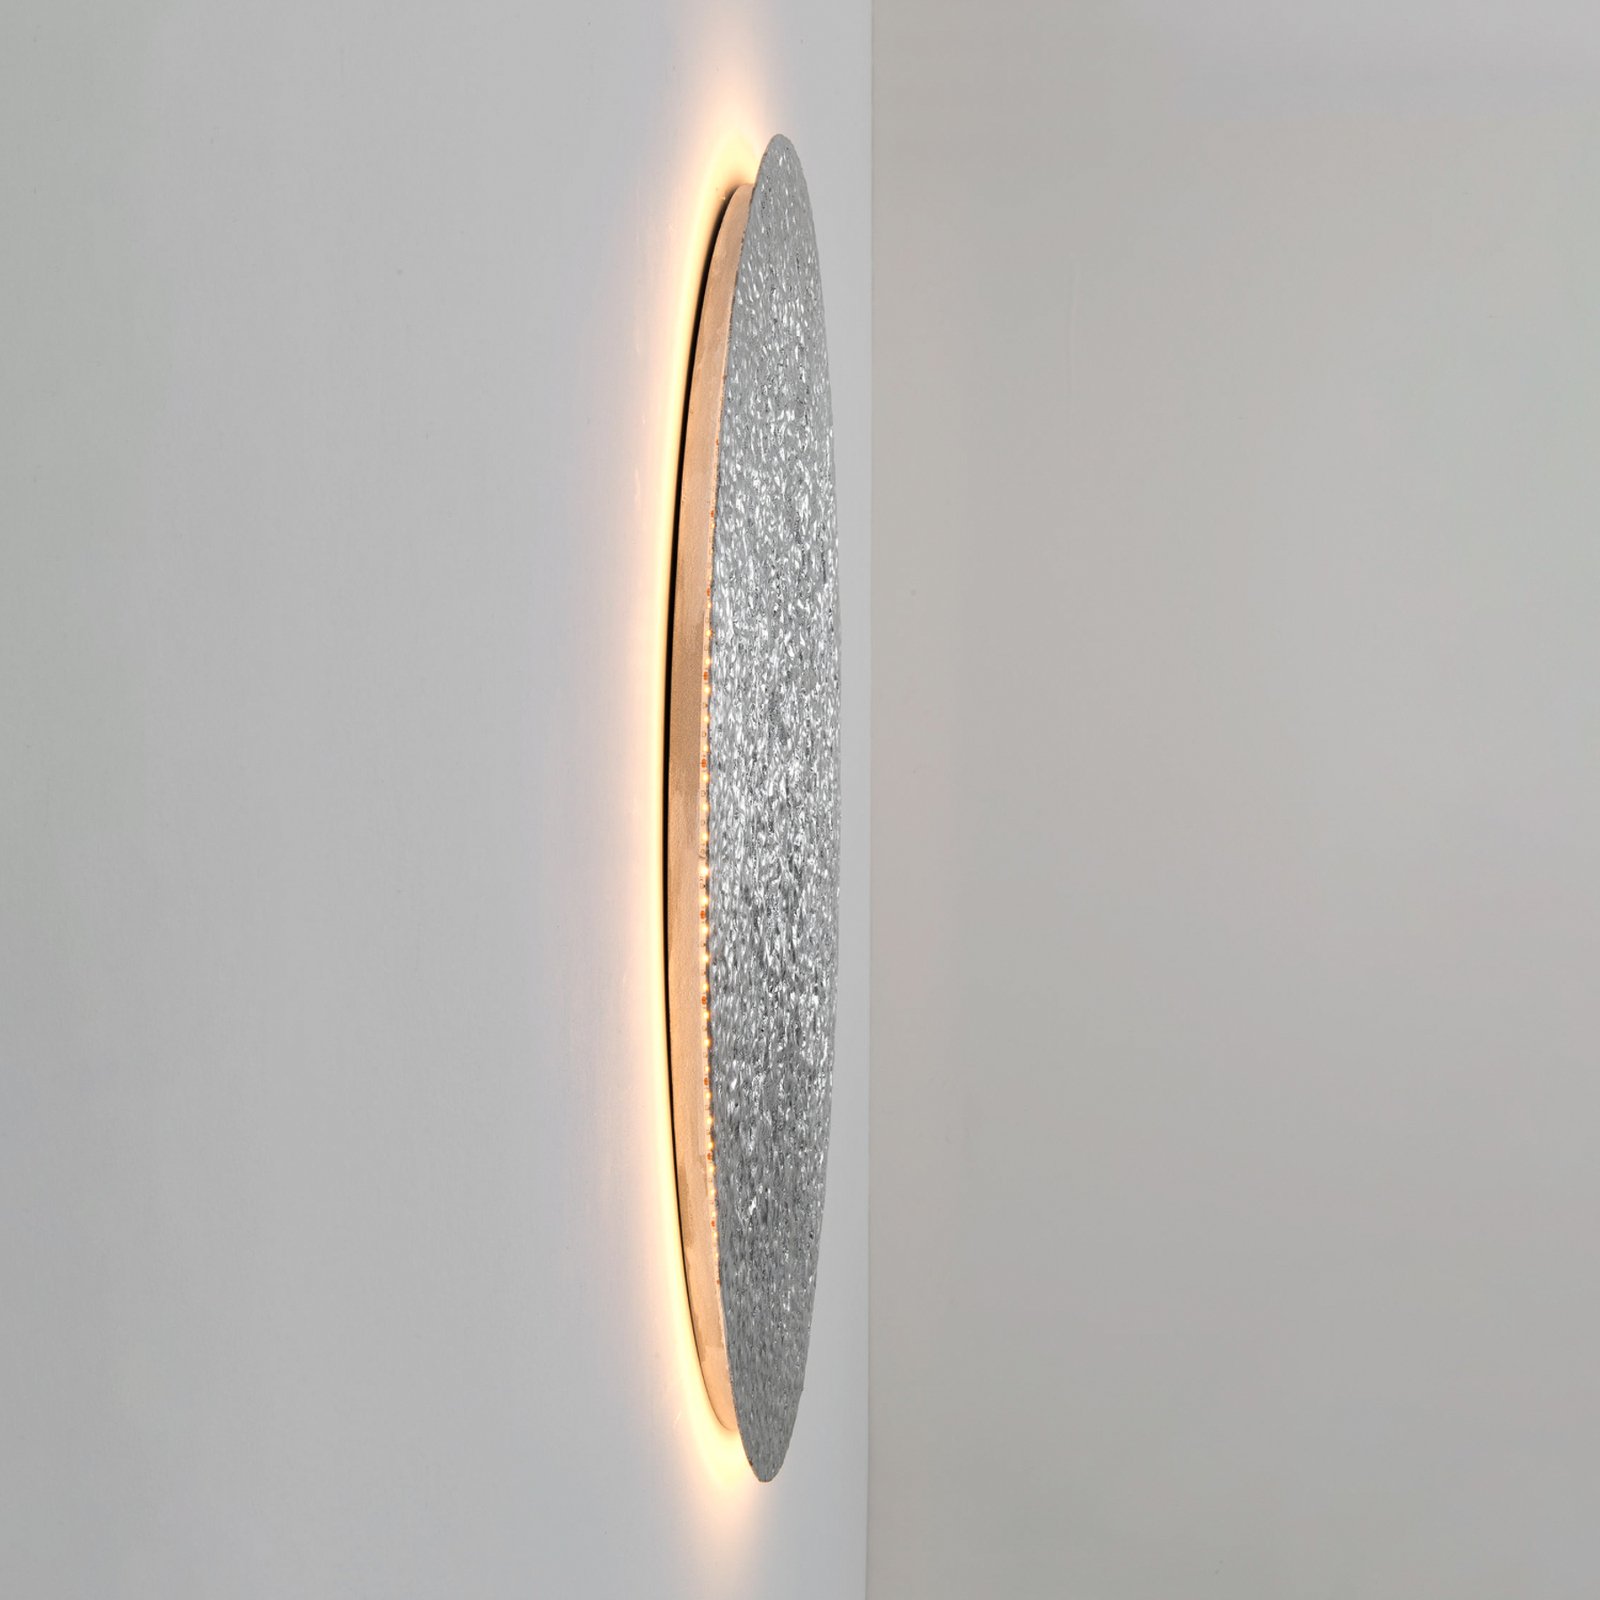 LED sienas lampa Meteor, sudraba krāsā, Ø 100 cm, dzelzs